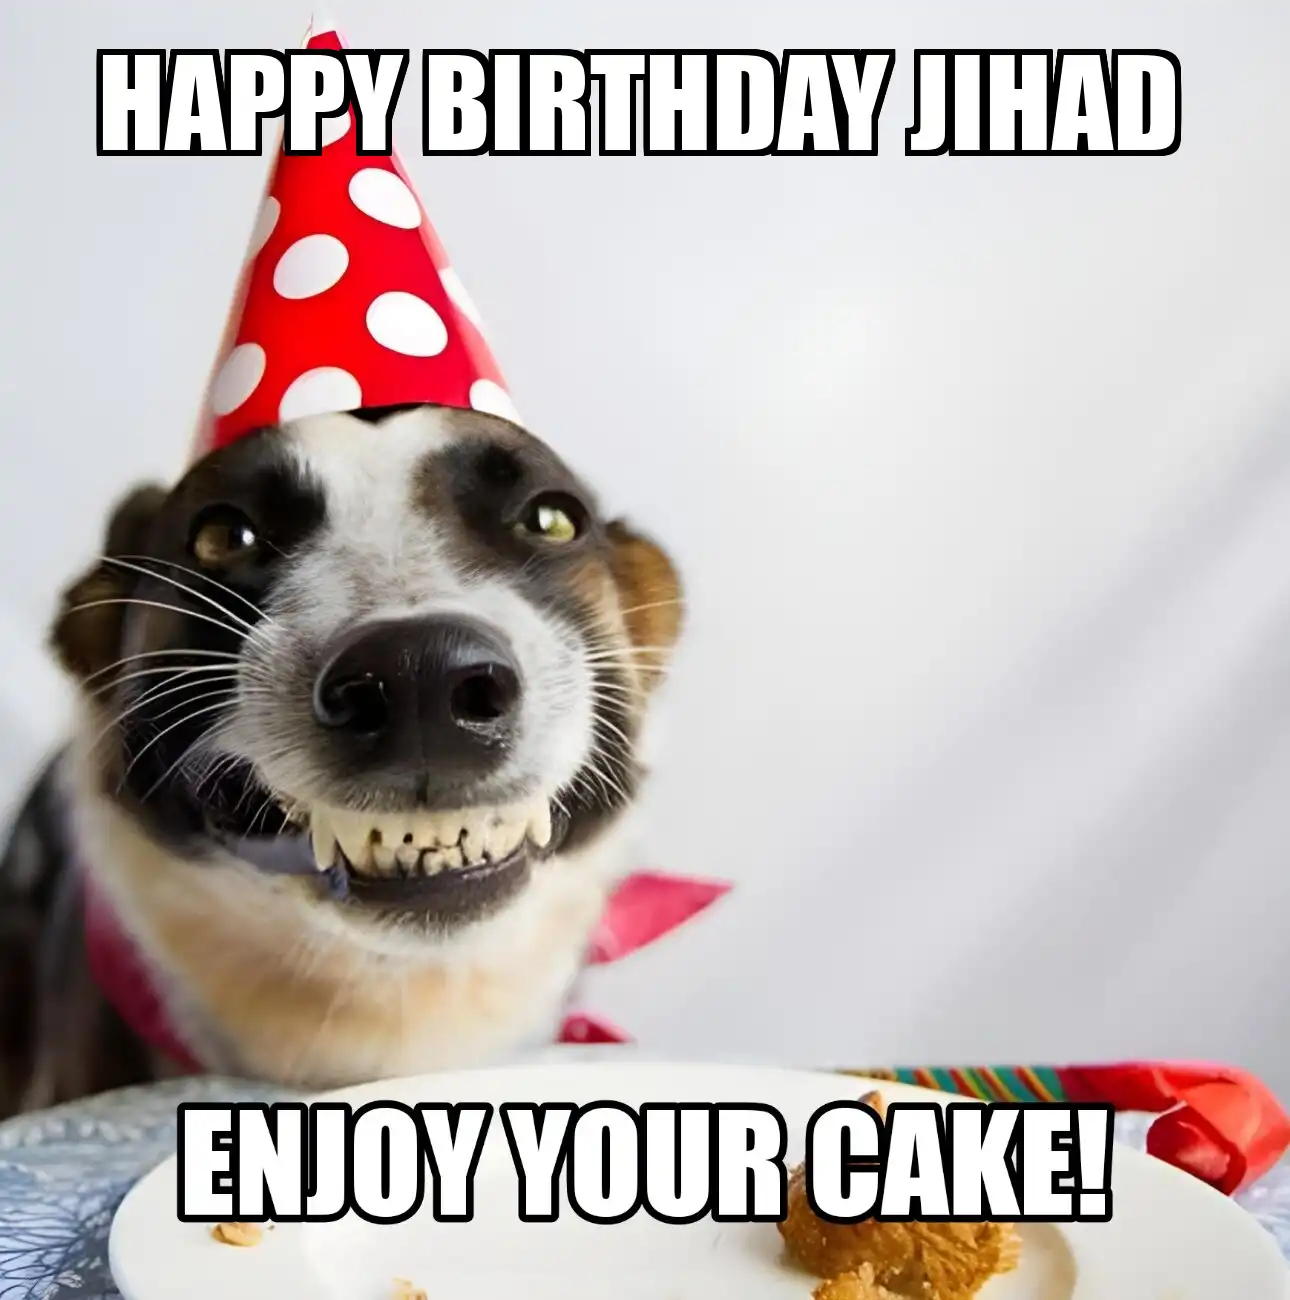 Happy Birthday Jihad Enjoy Your Cake Dog Meme